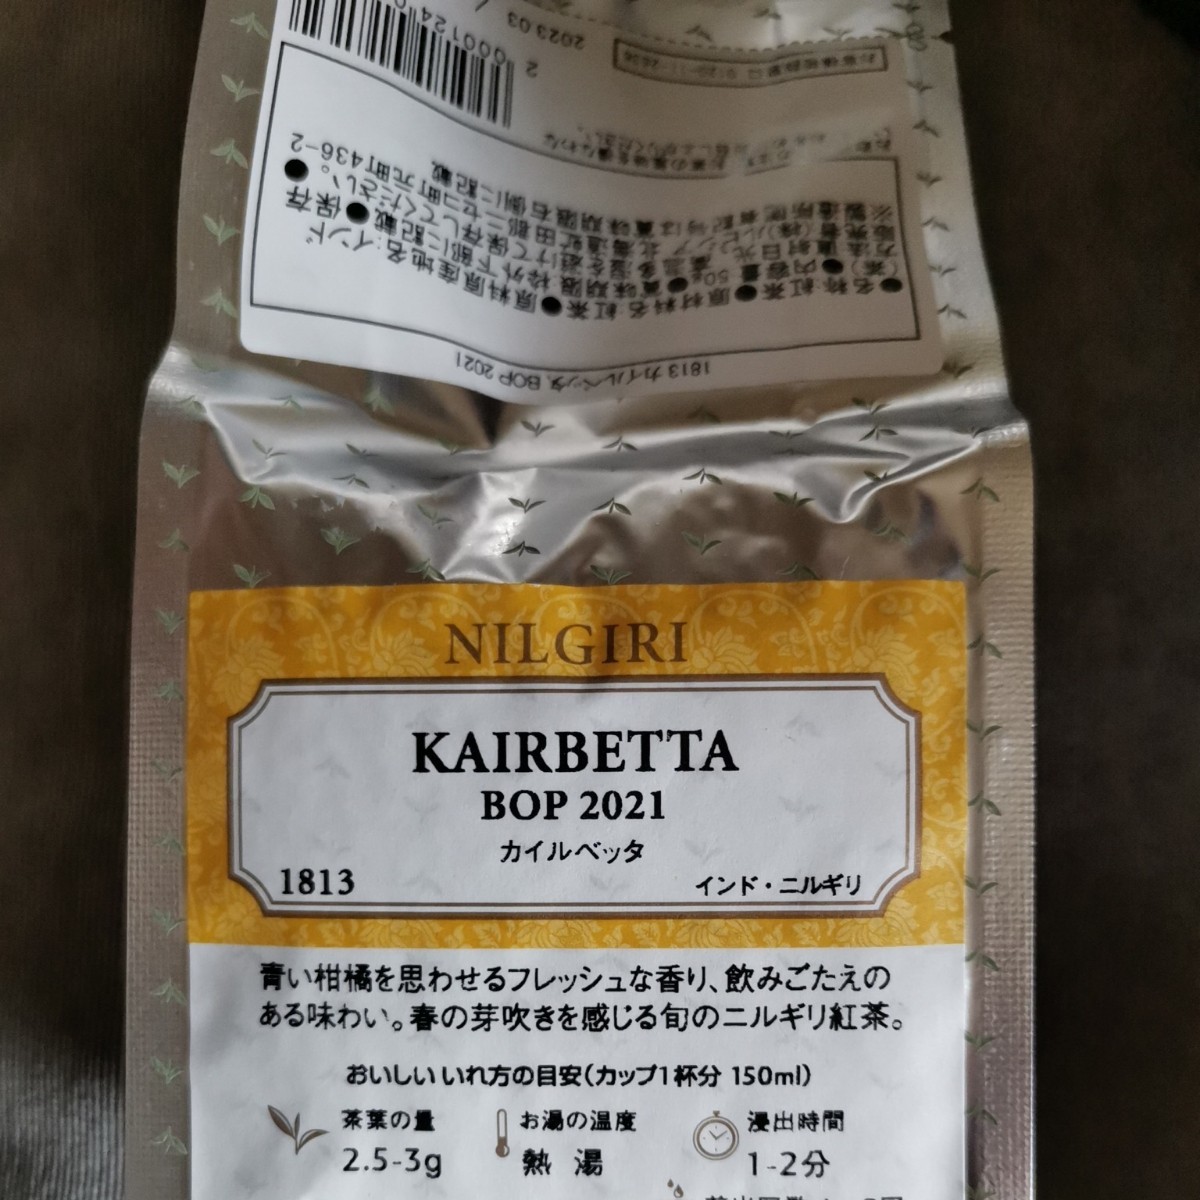 【LUPICIA】カイルベッタ 2021 ニルギリ紅茶 【送料無料】